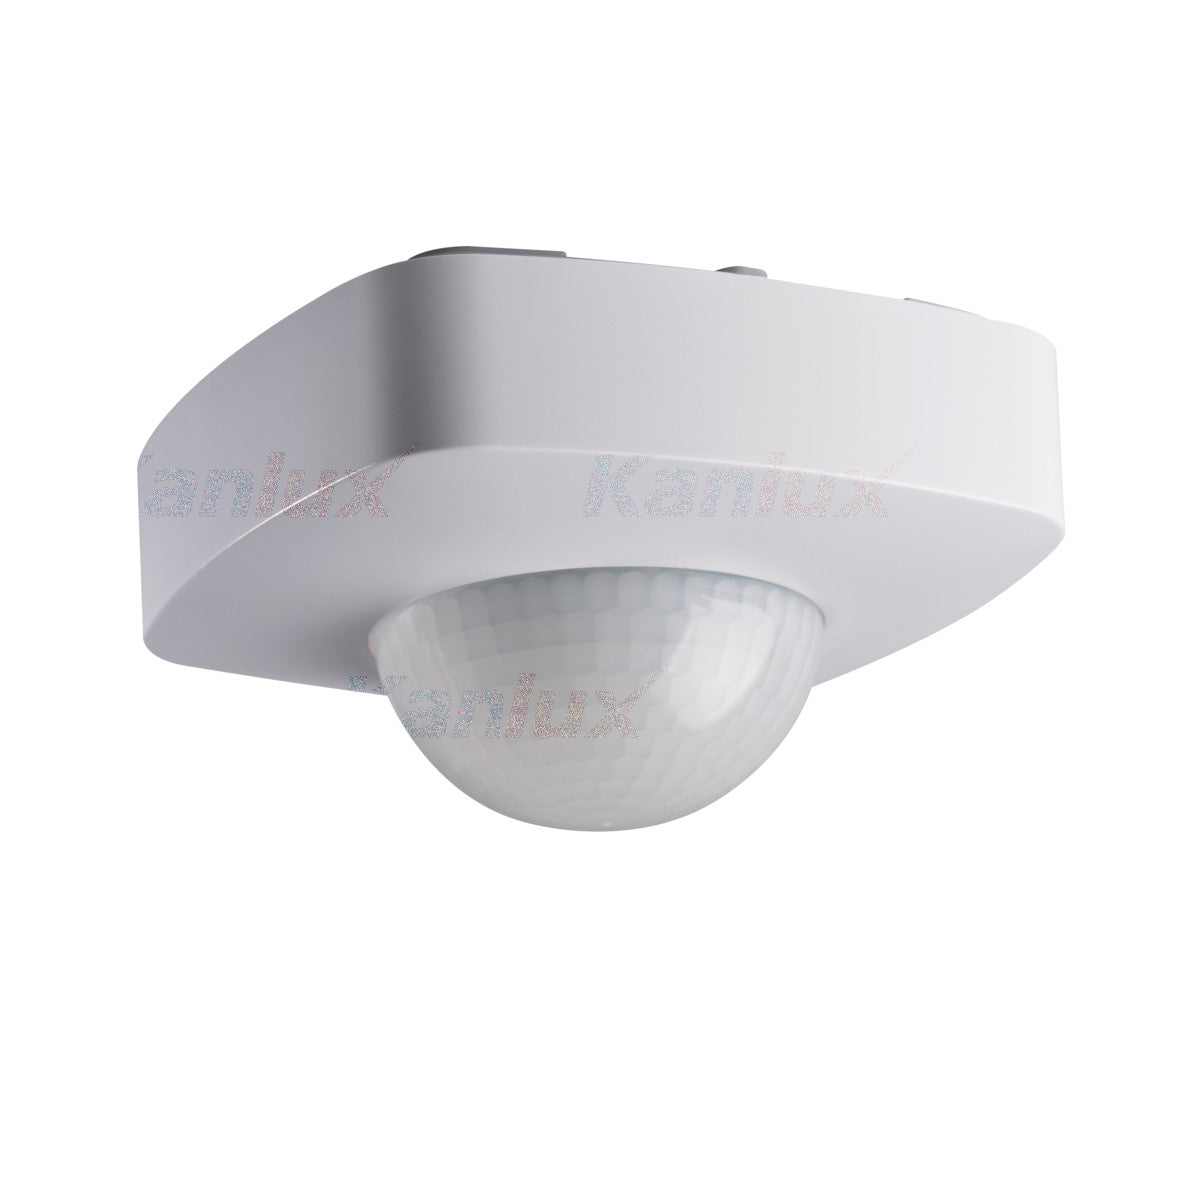 Kanlux SENTO Occupancy Sensor 360 PIR Motion Light Switch Presence Detection Movement Indoor